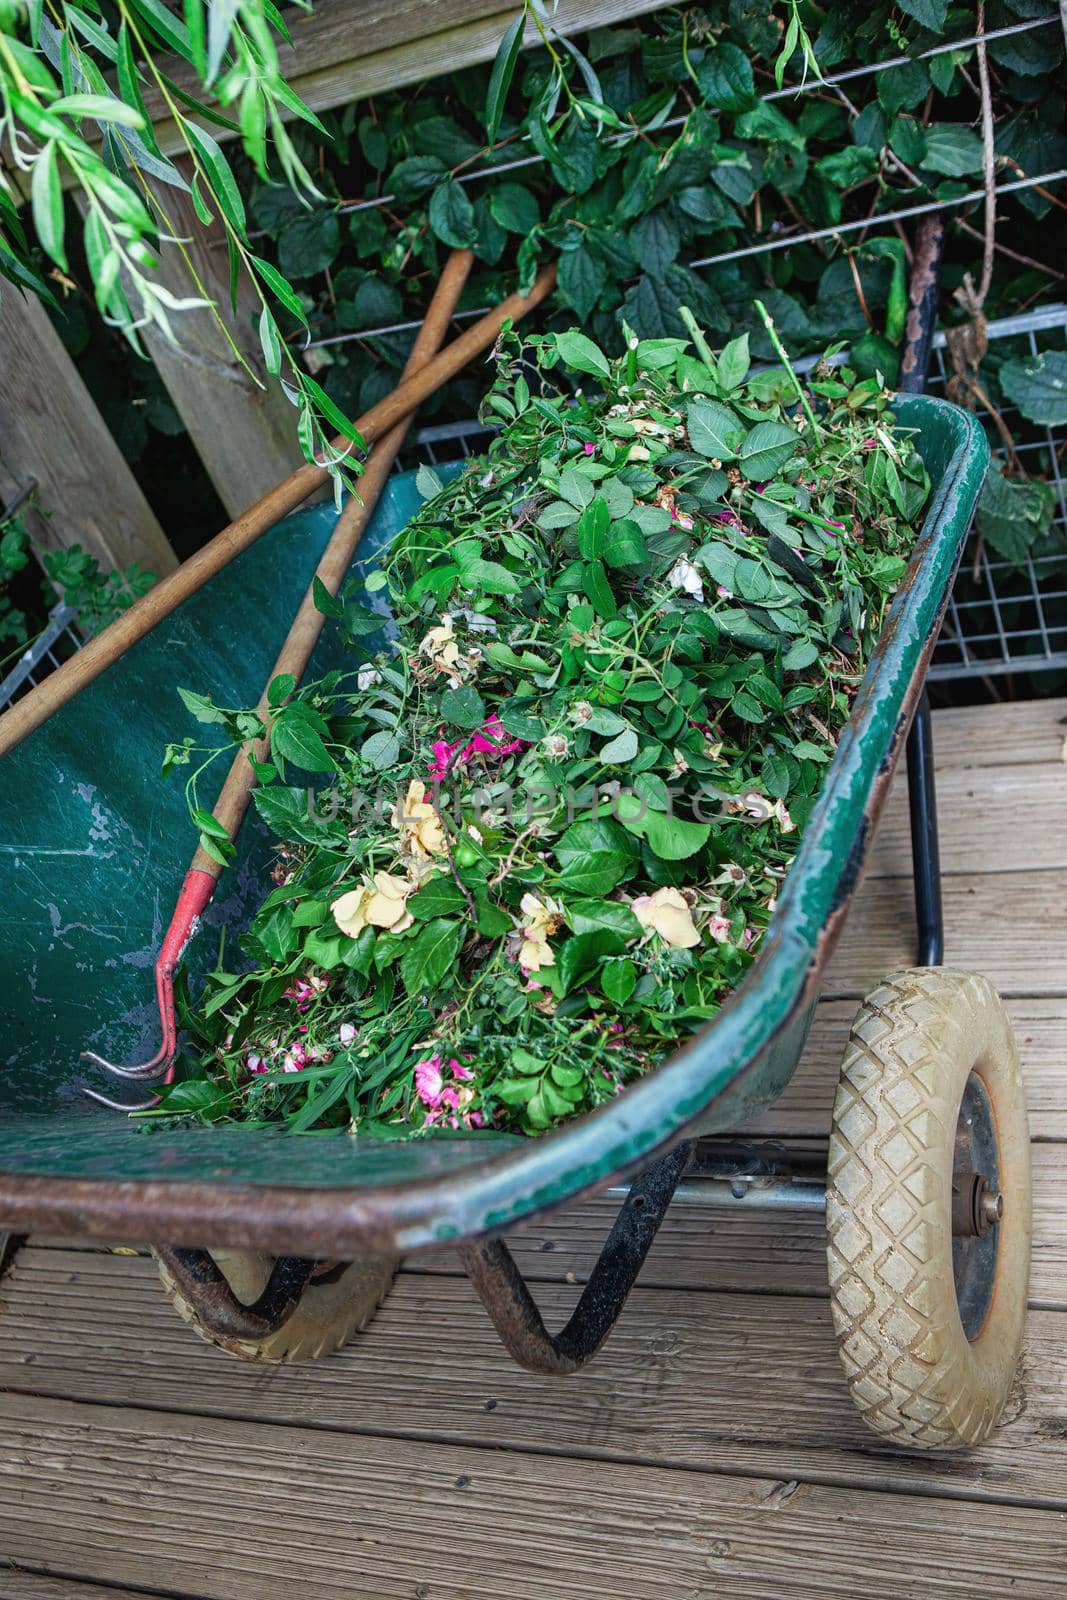 Green waste in a wheelbarrow and gardening tools